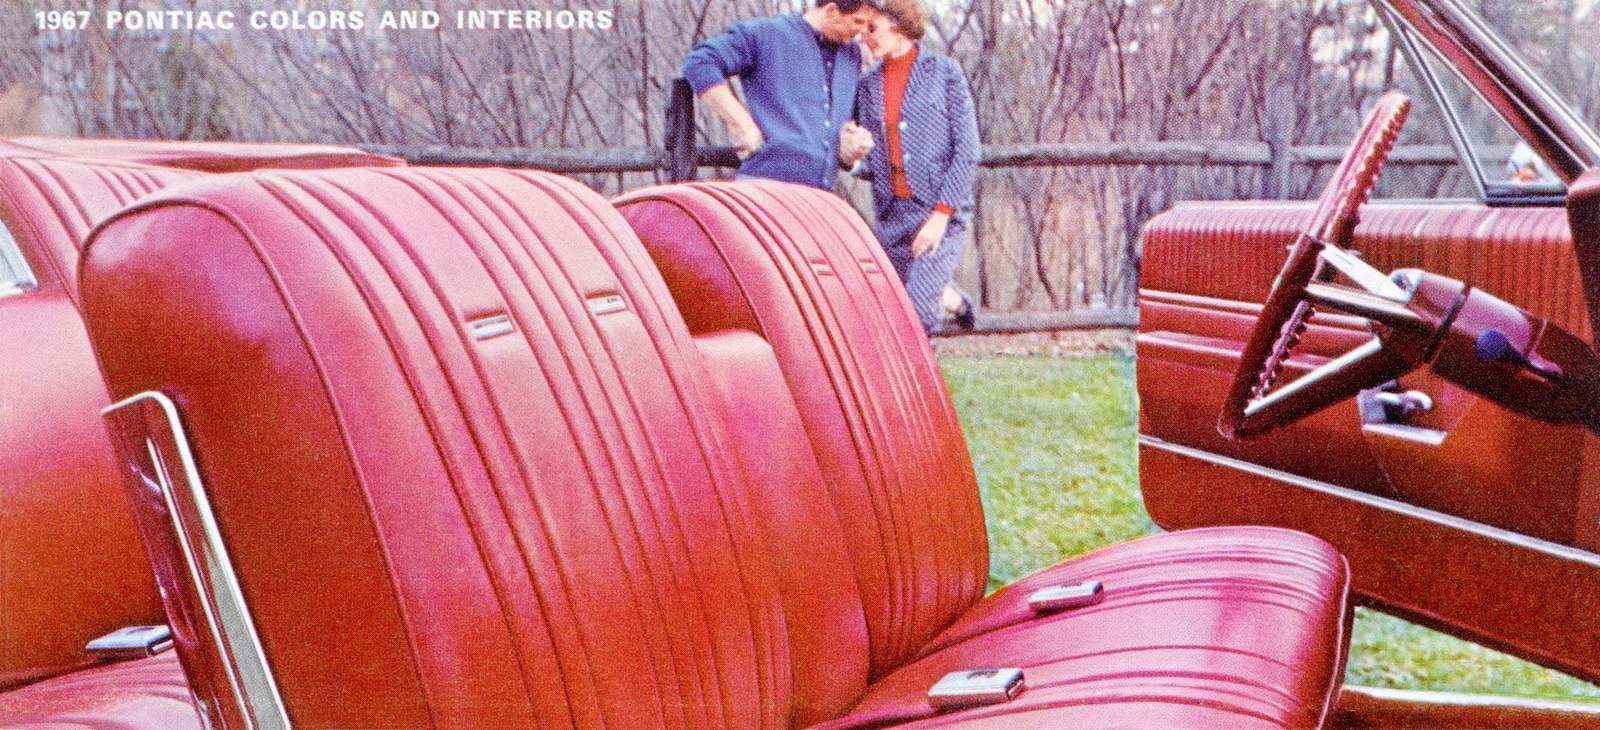 n_1967 Pontiac Colors and Interiors-01.jpg